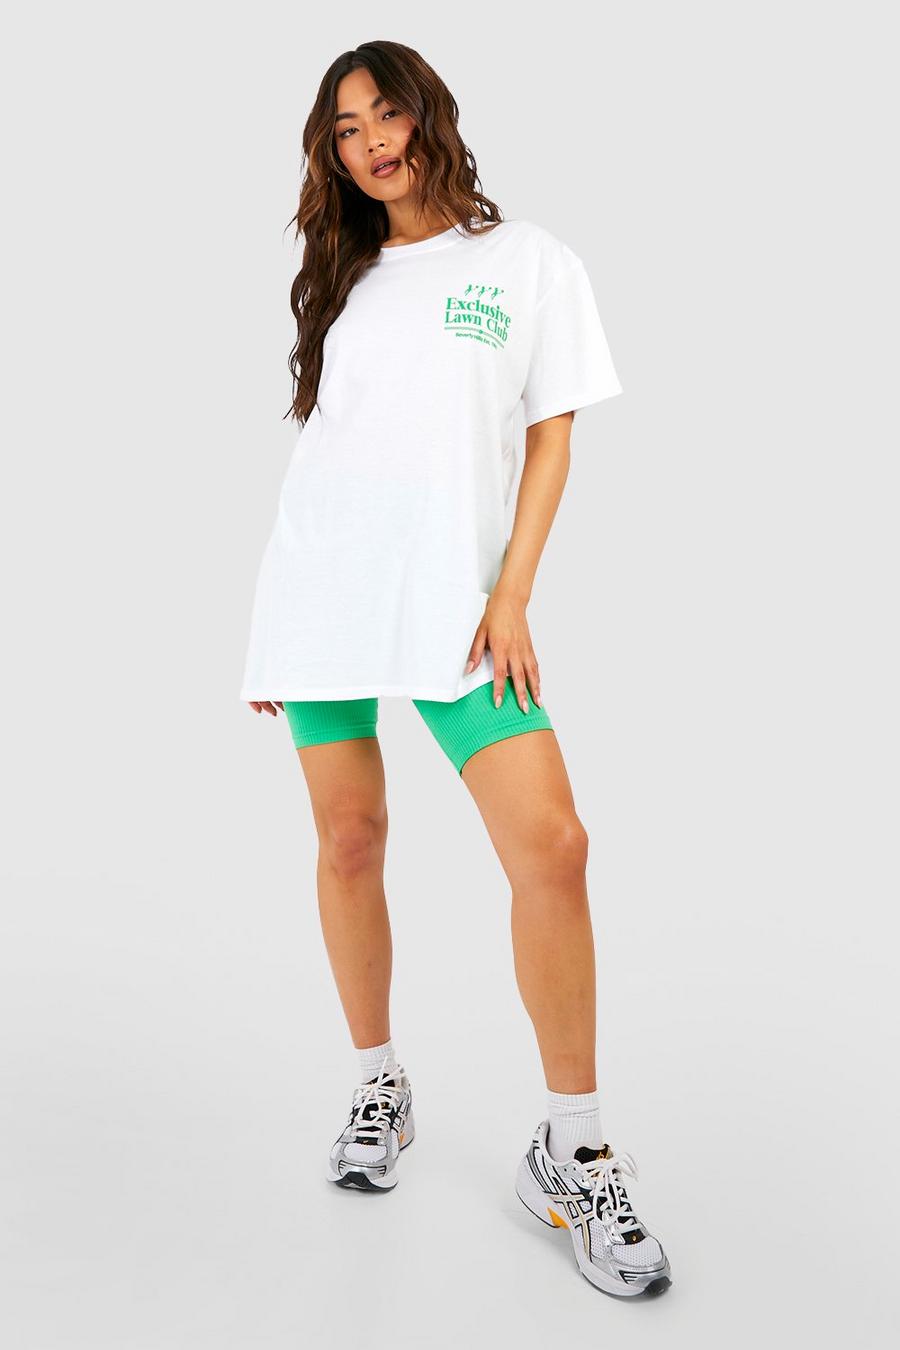 White Oversized Lawn Club T-Shirt Met Borstopdruk